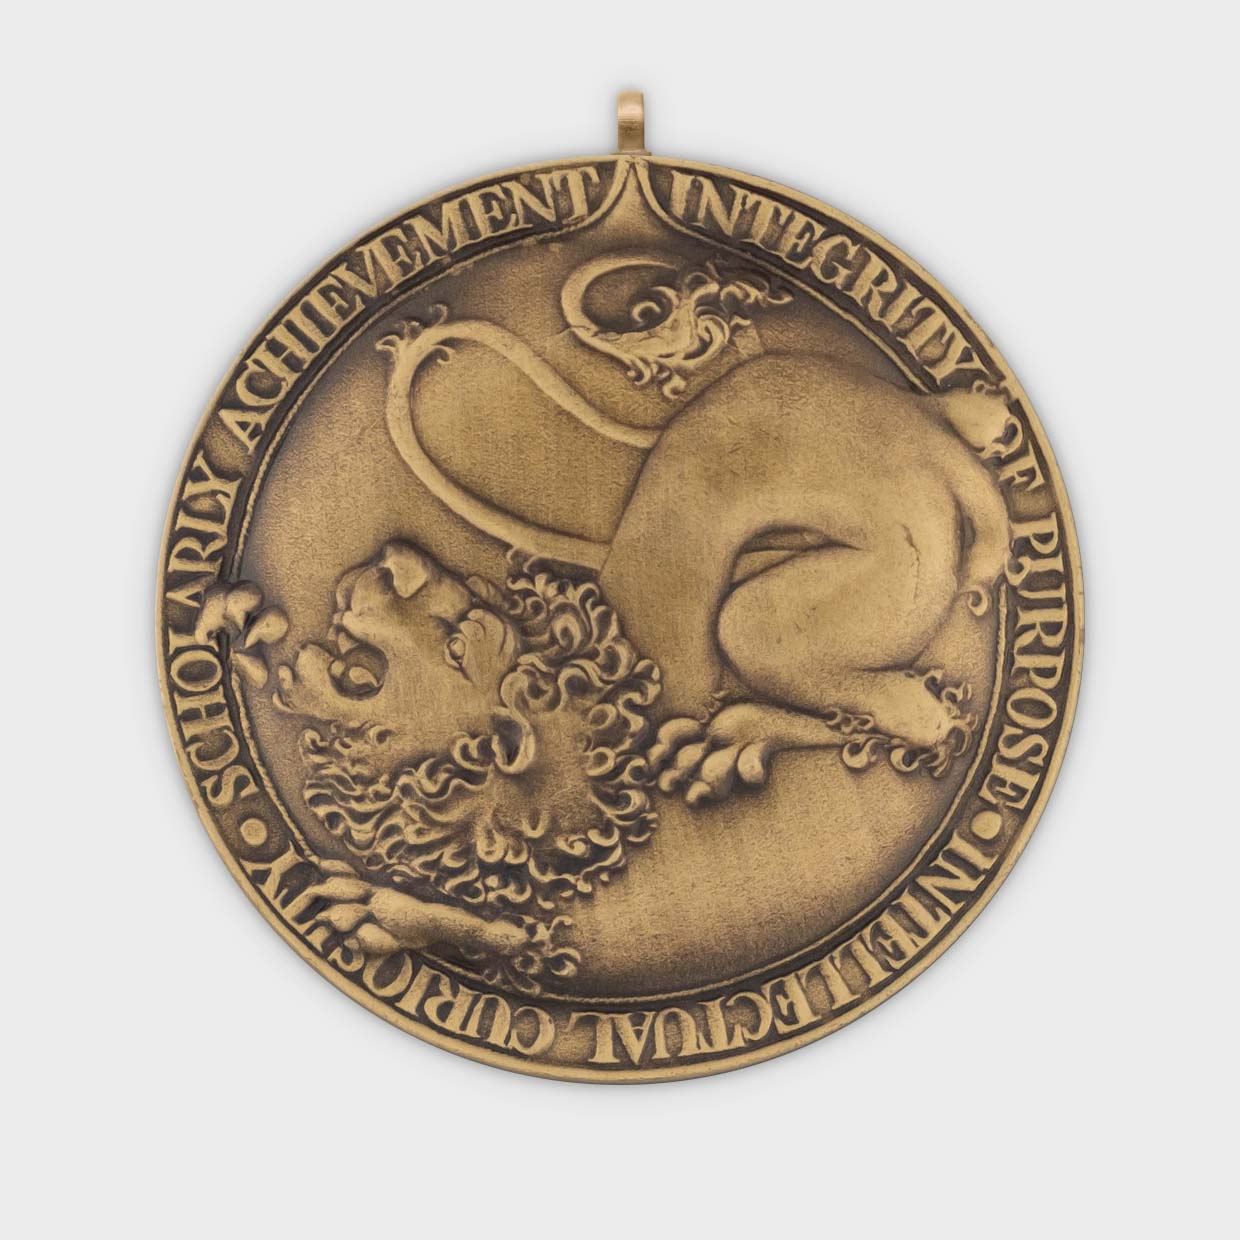 Schreyer Medal Obverse